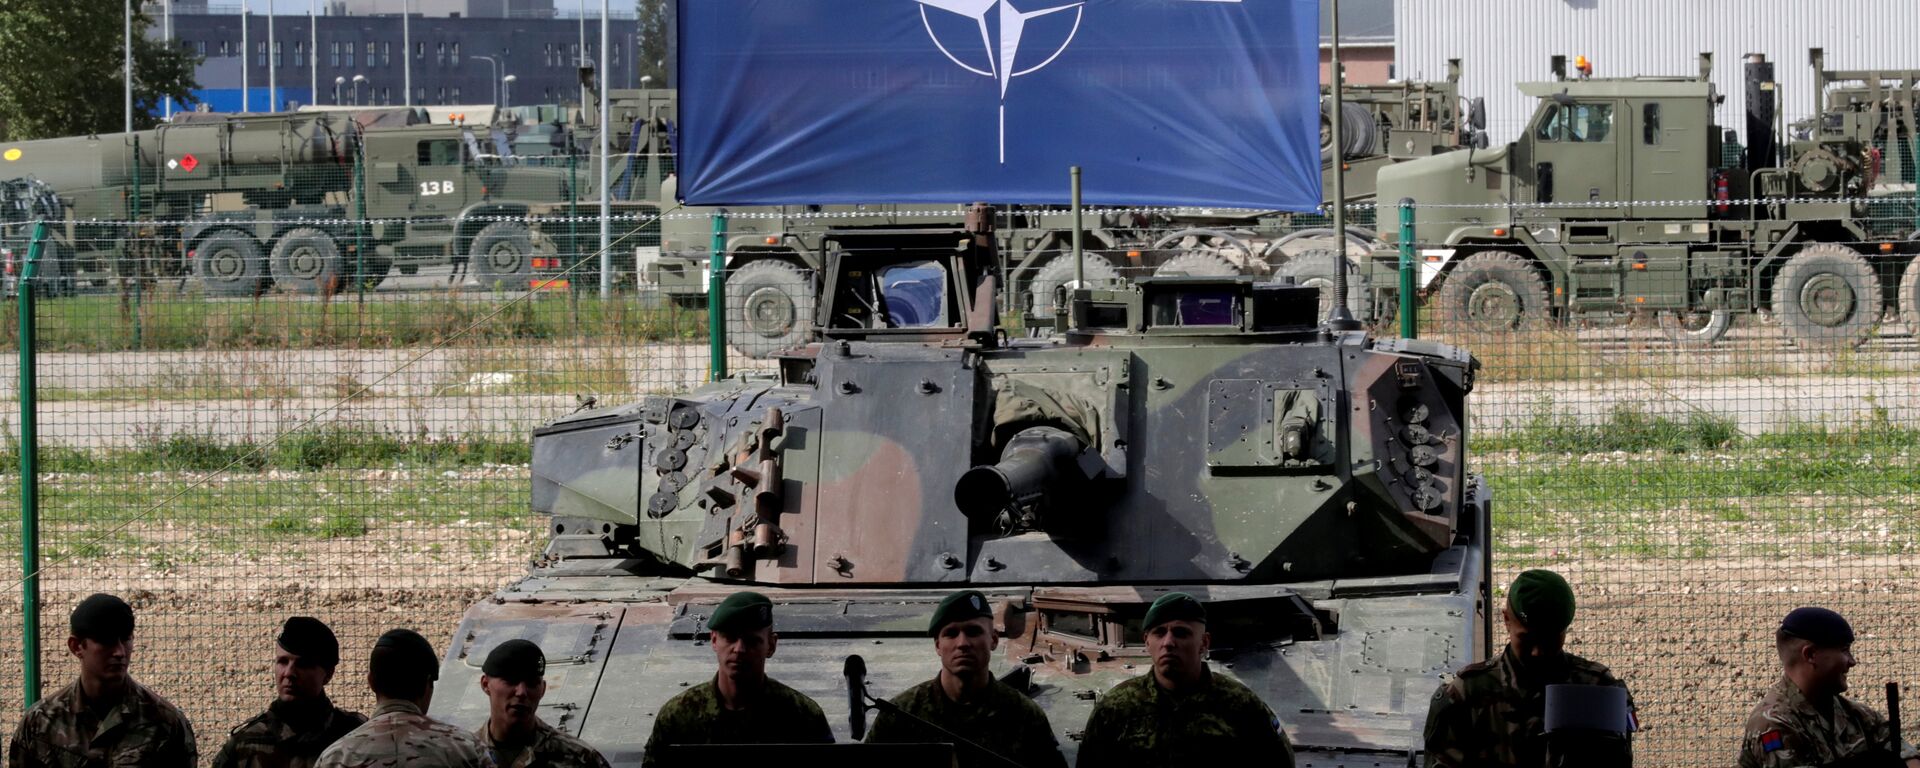 NATO eFP battle group soldiers wait for NATO Secretary General Jens Stoltenberg visit in Tapa military base, Estonia September 6, 2017 - Sputnik International, 1920, 27.12.2021